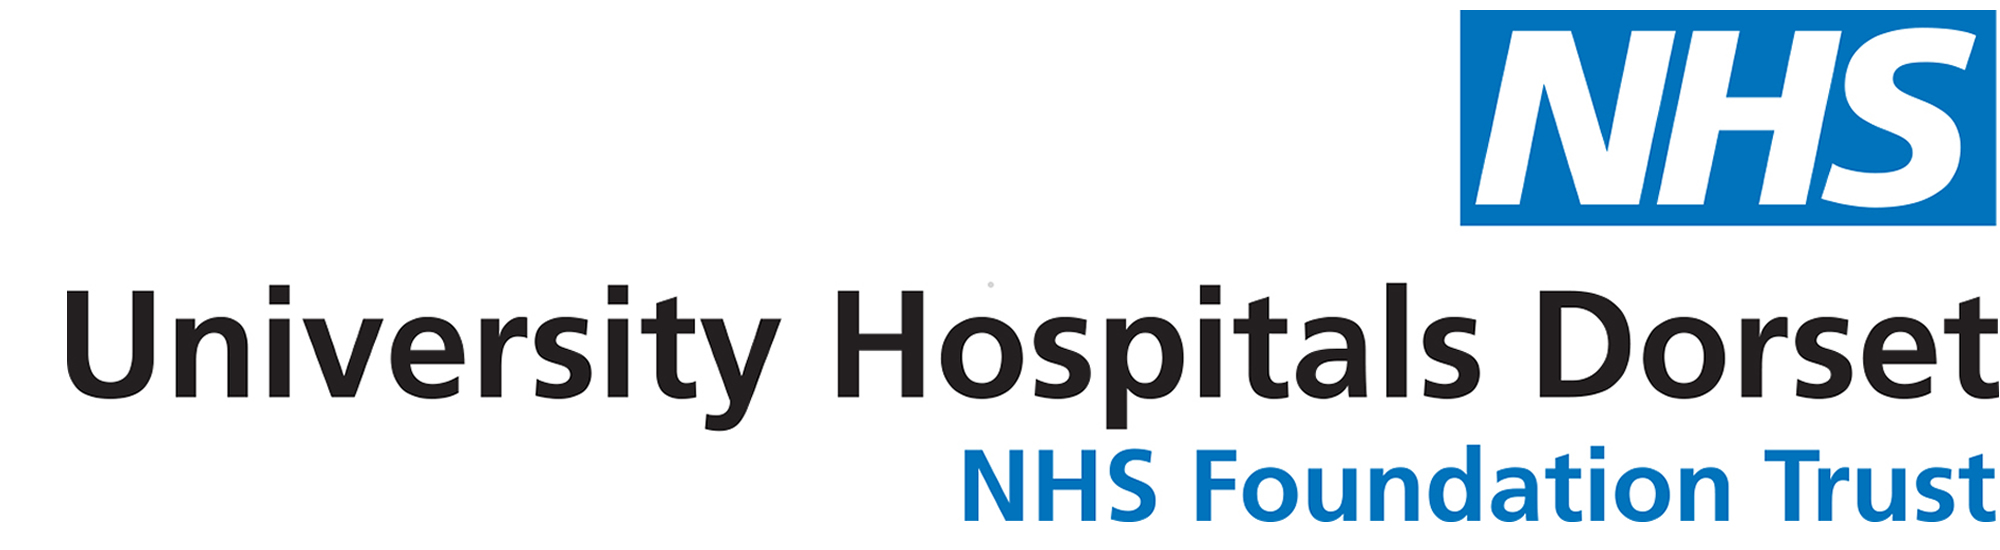 Begin a rewarding new career with University Hospitals Dorset